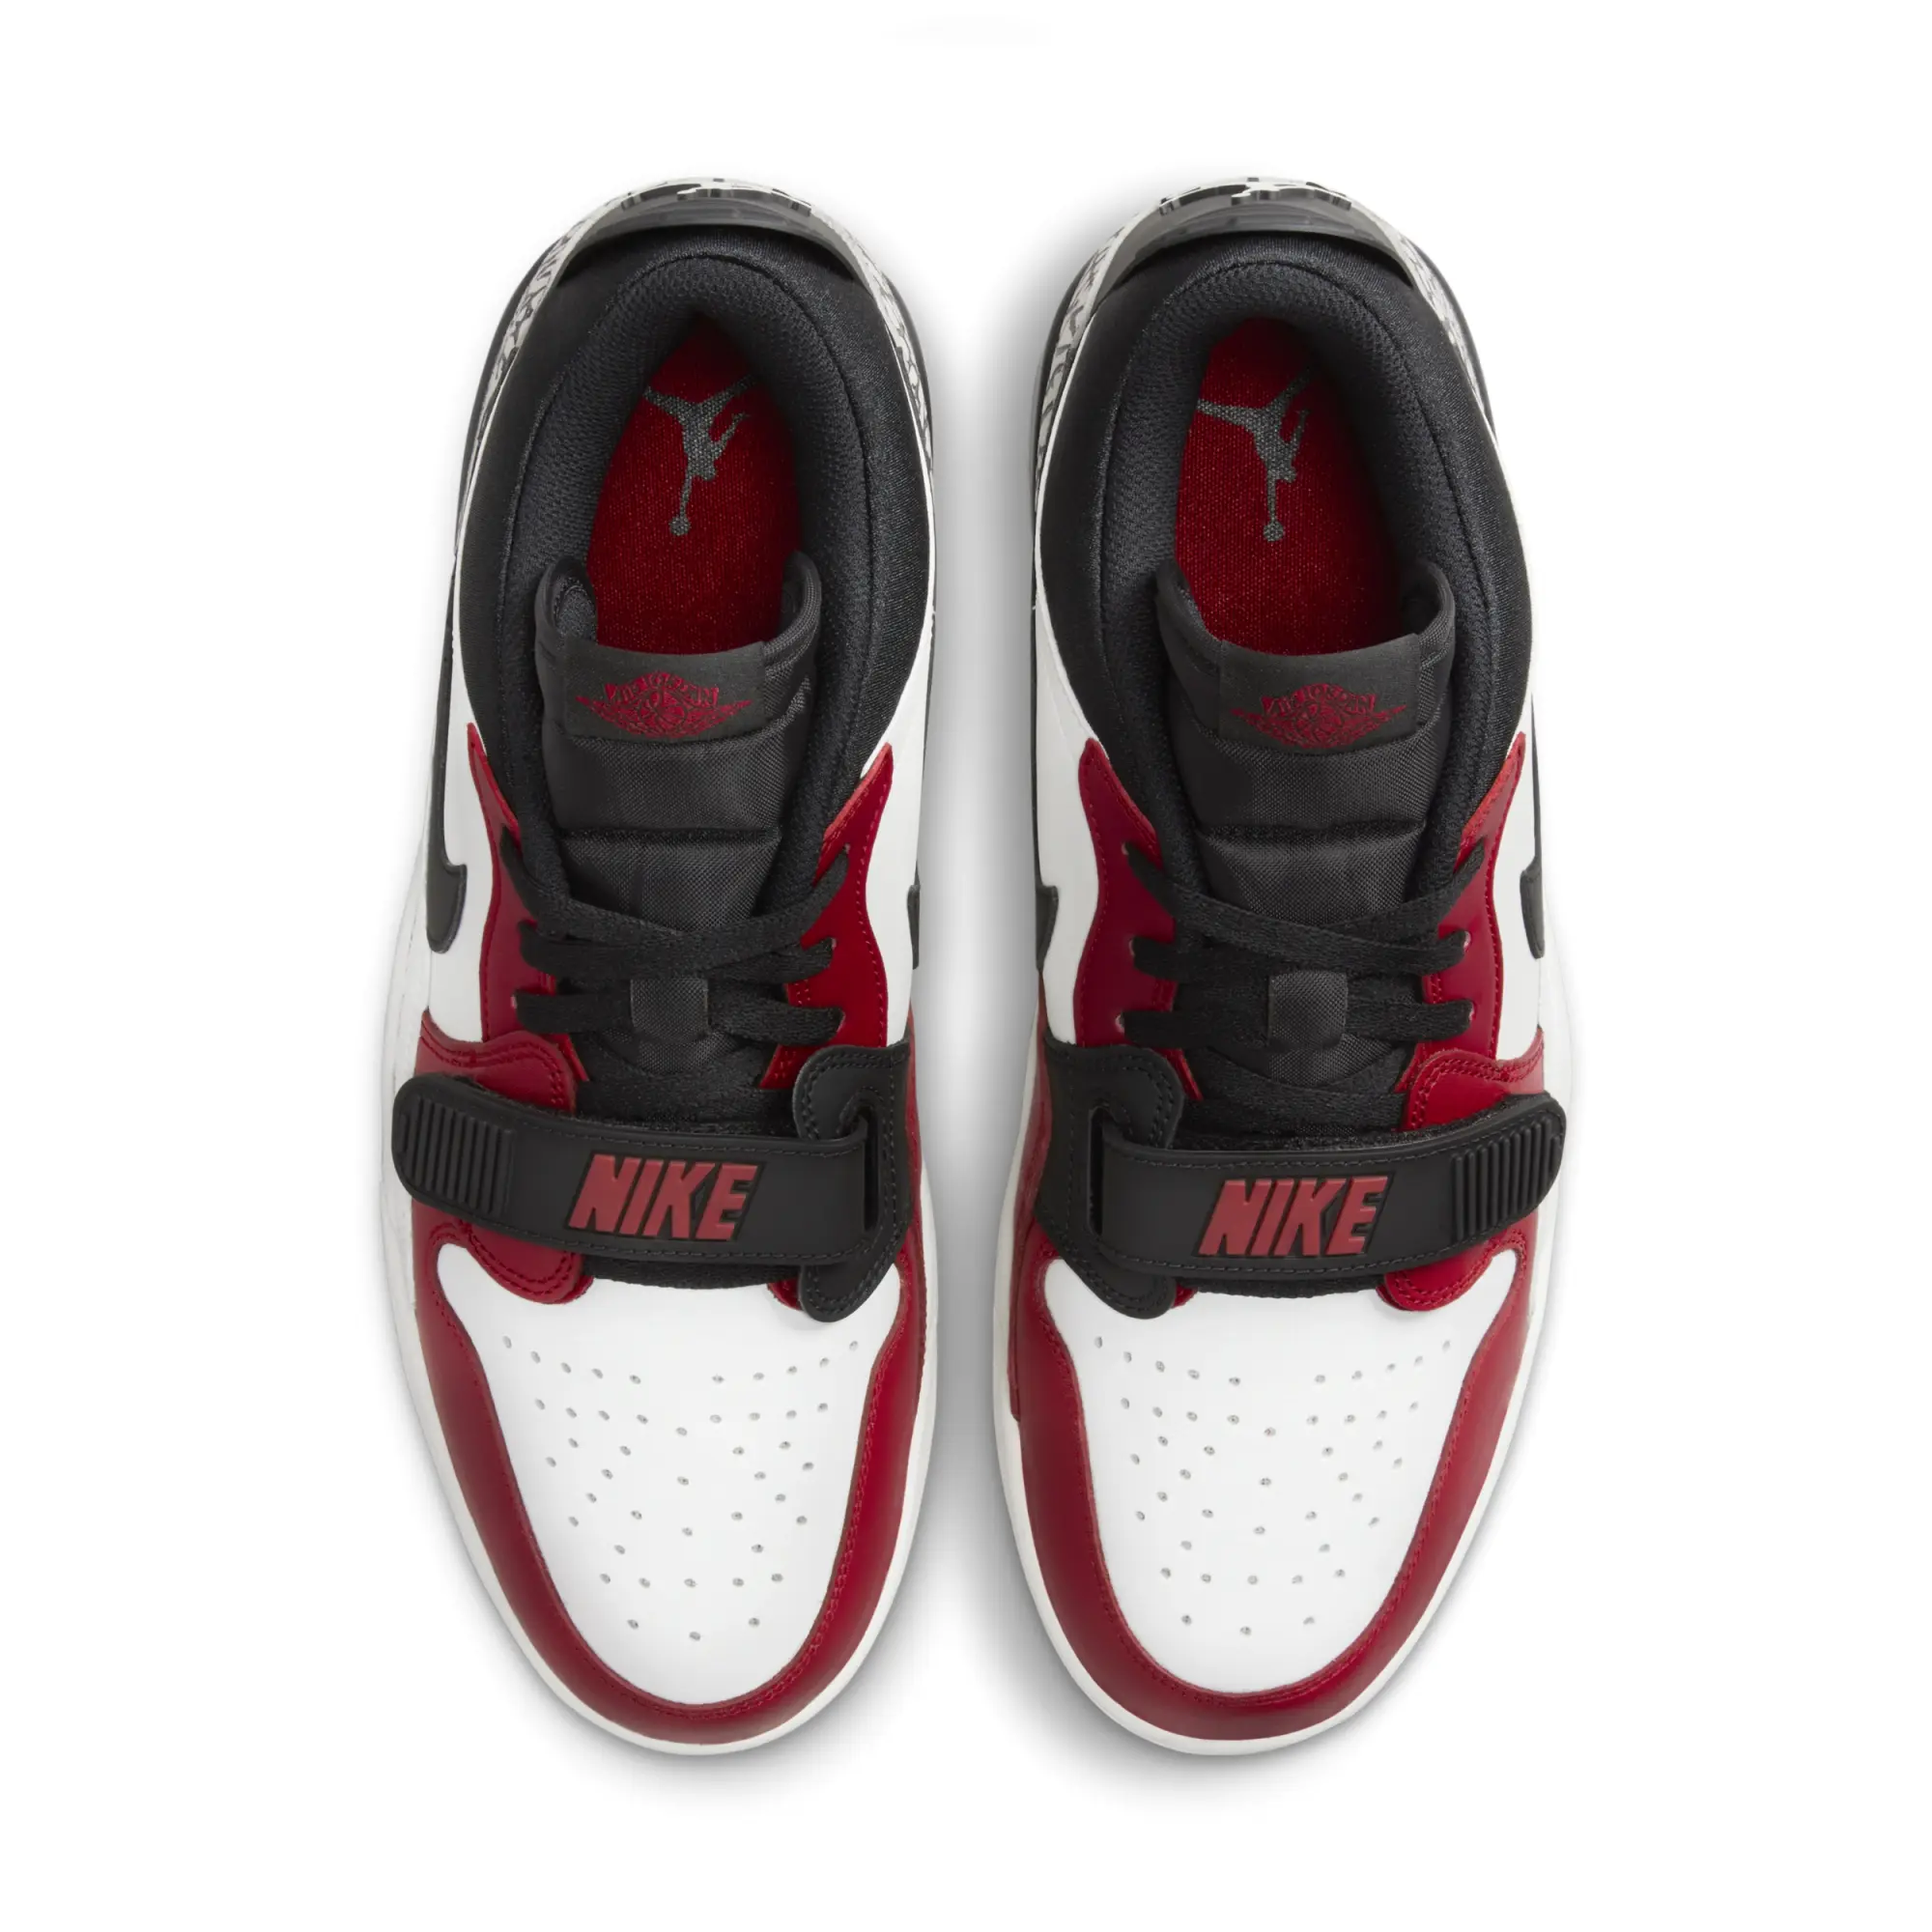 Nike Jordan Legacy 312 Low Trainer - White / Black / Varsity Red / Sail